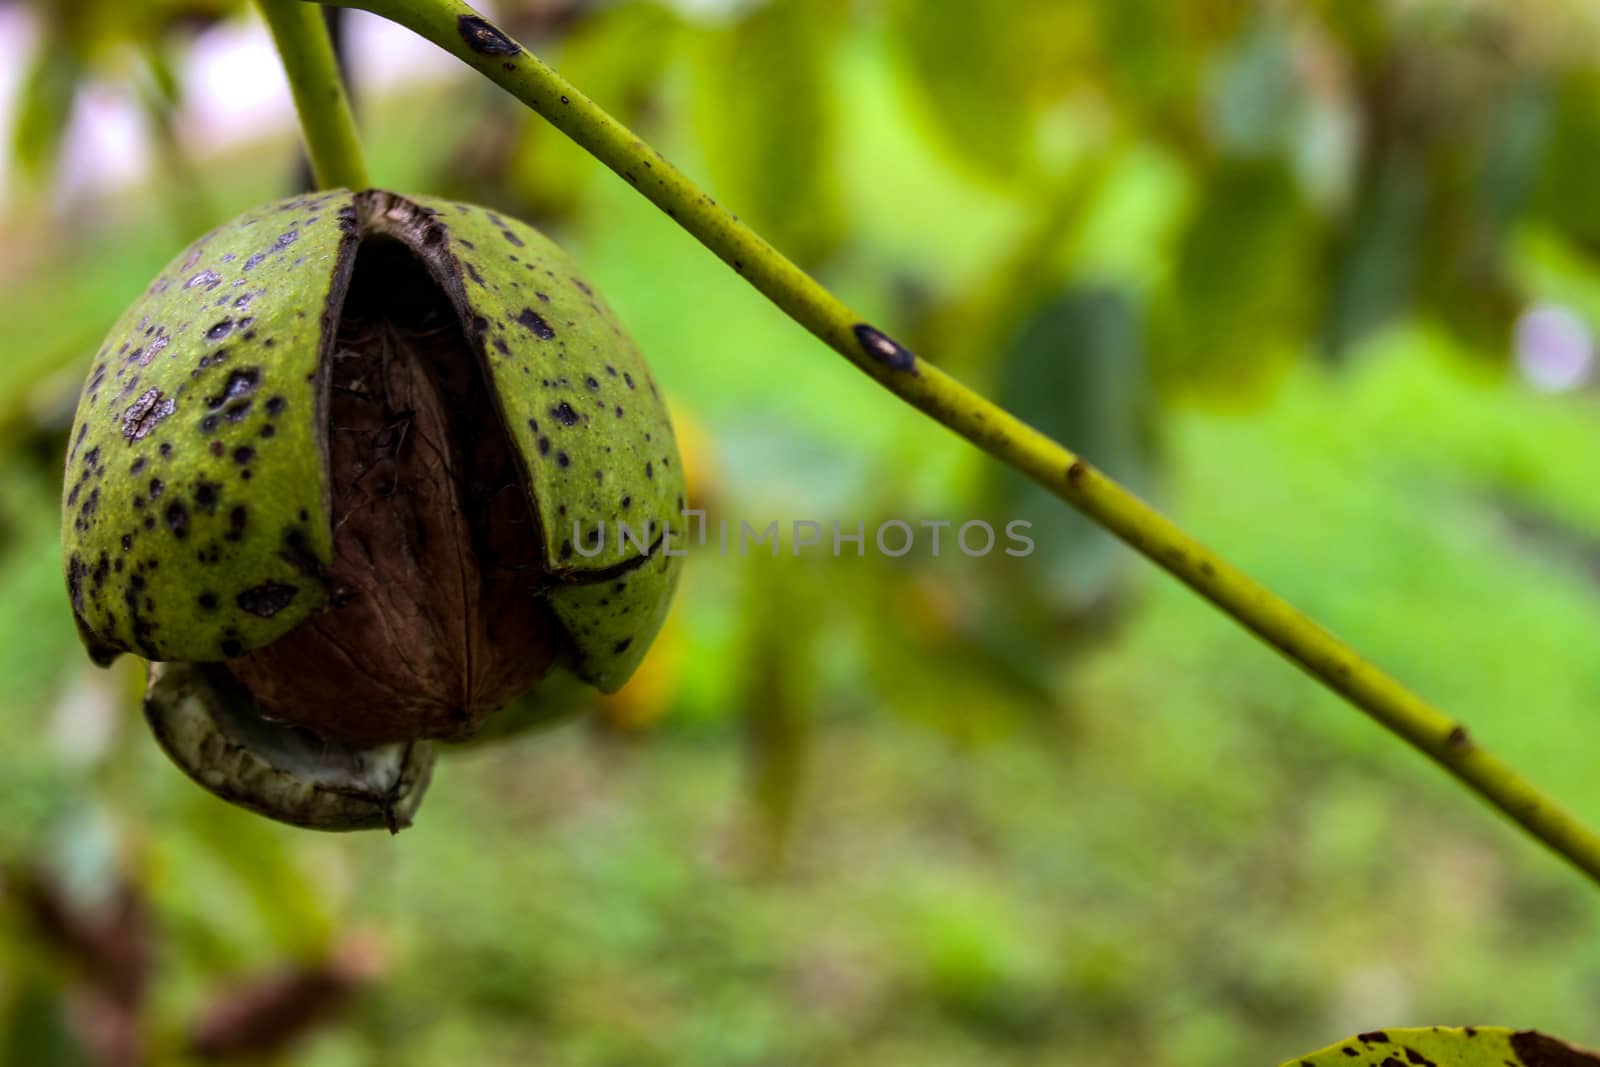 A ripe walnut protruding from a cracked green shell. Zavidovici, Bosnia and Herzegovina.